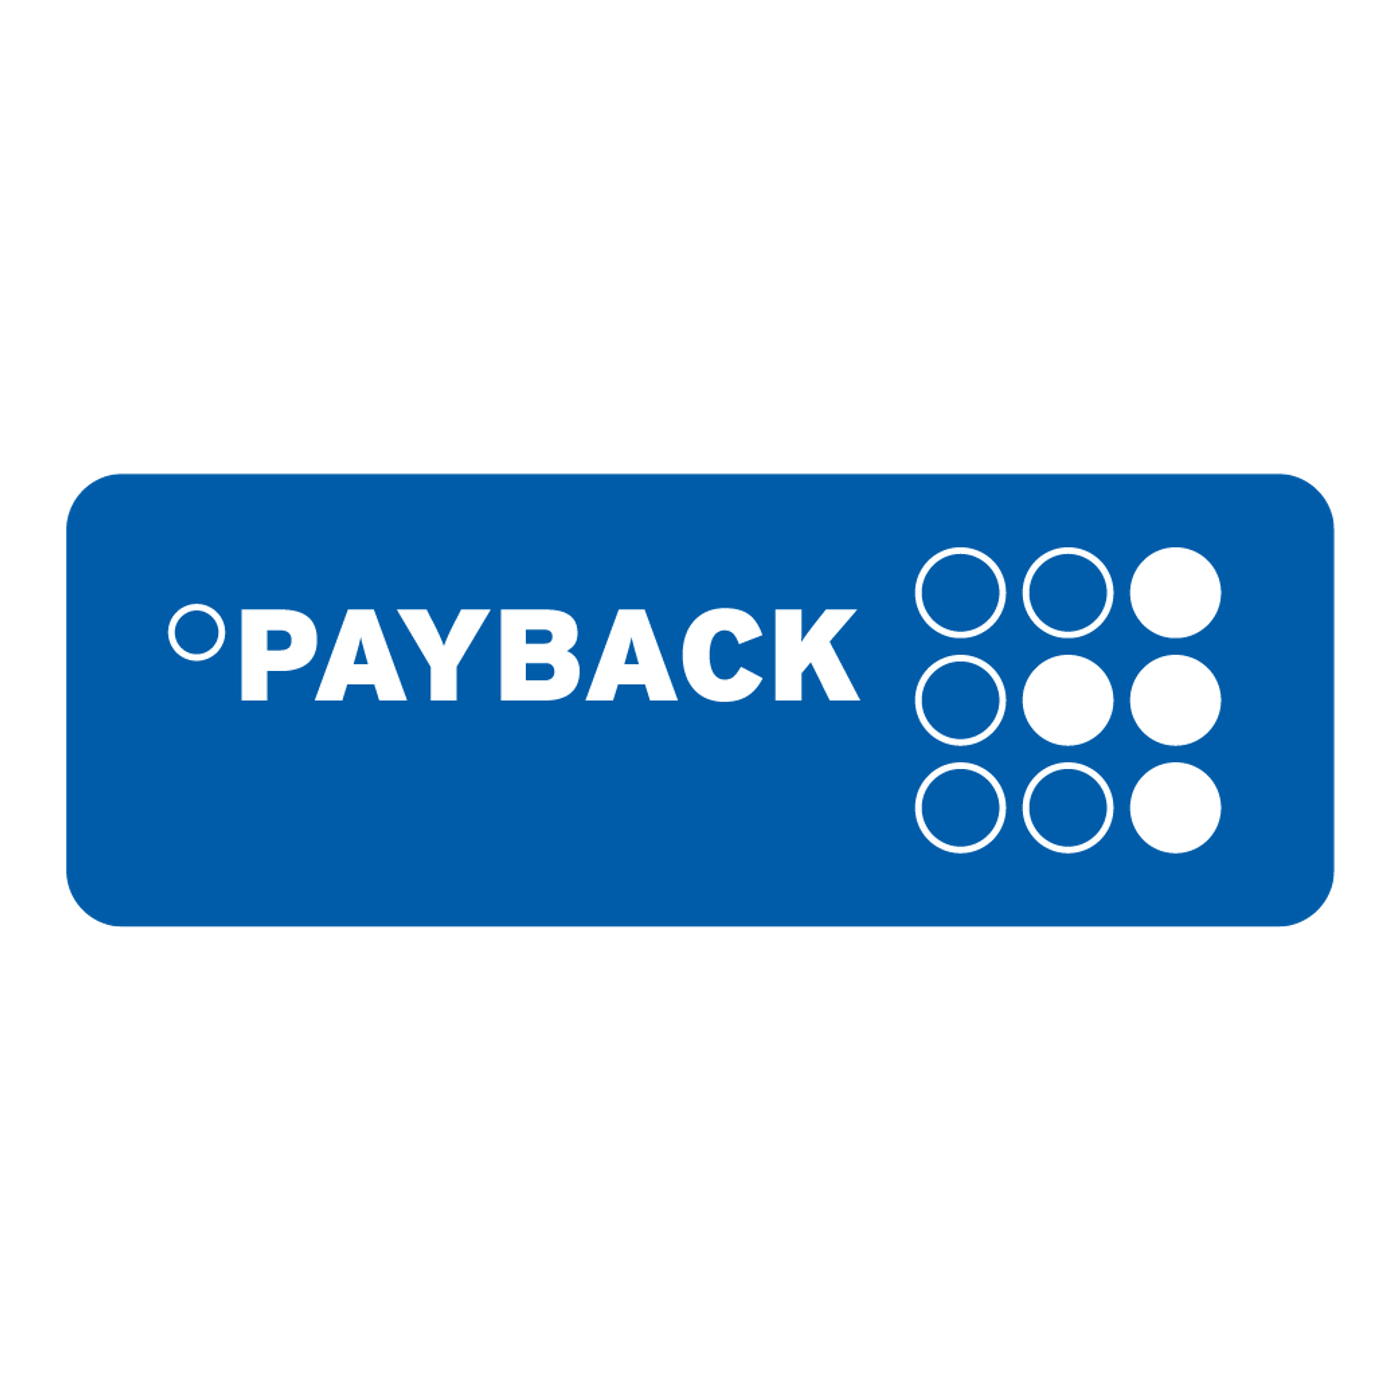 Payback logo